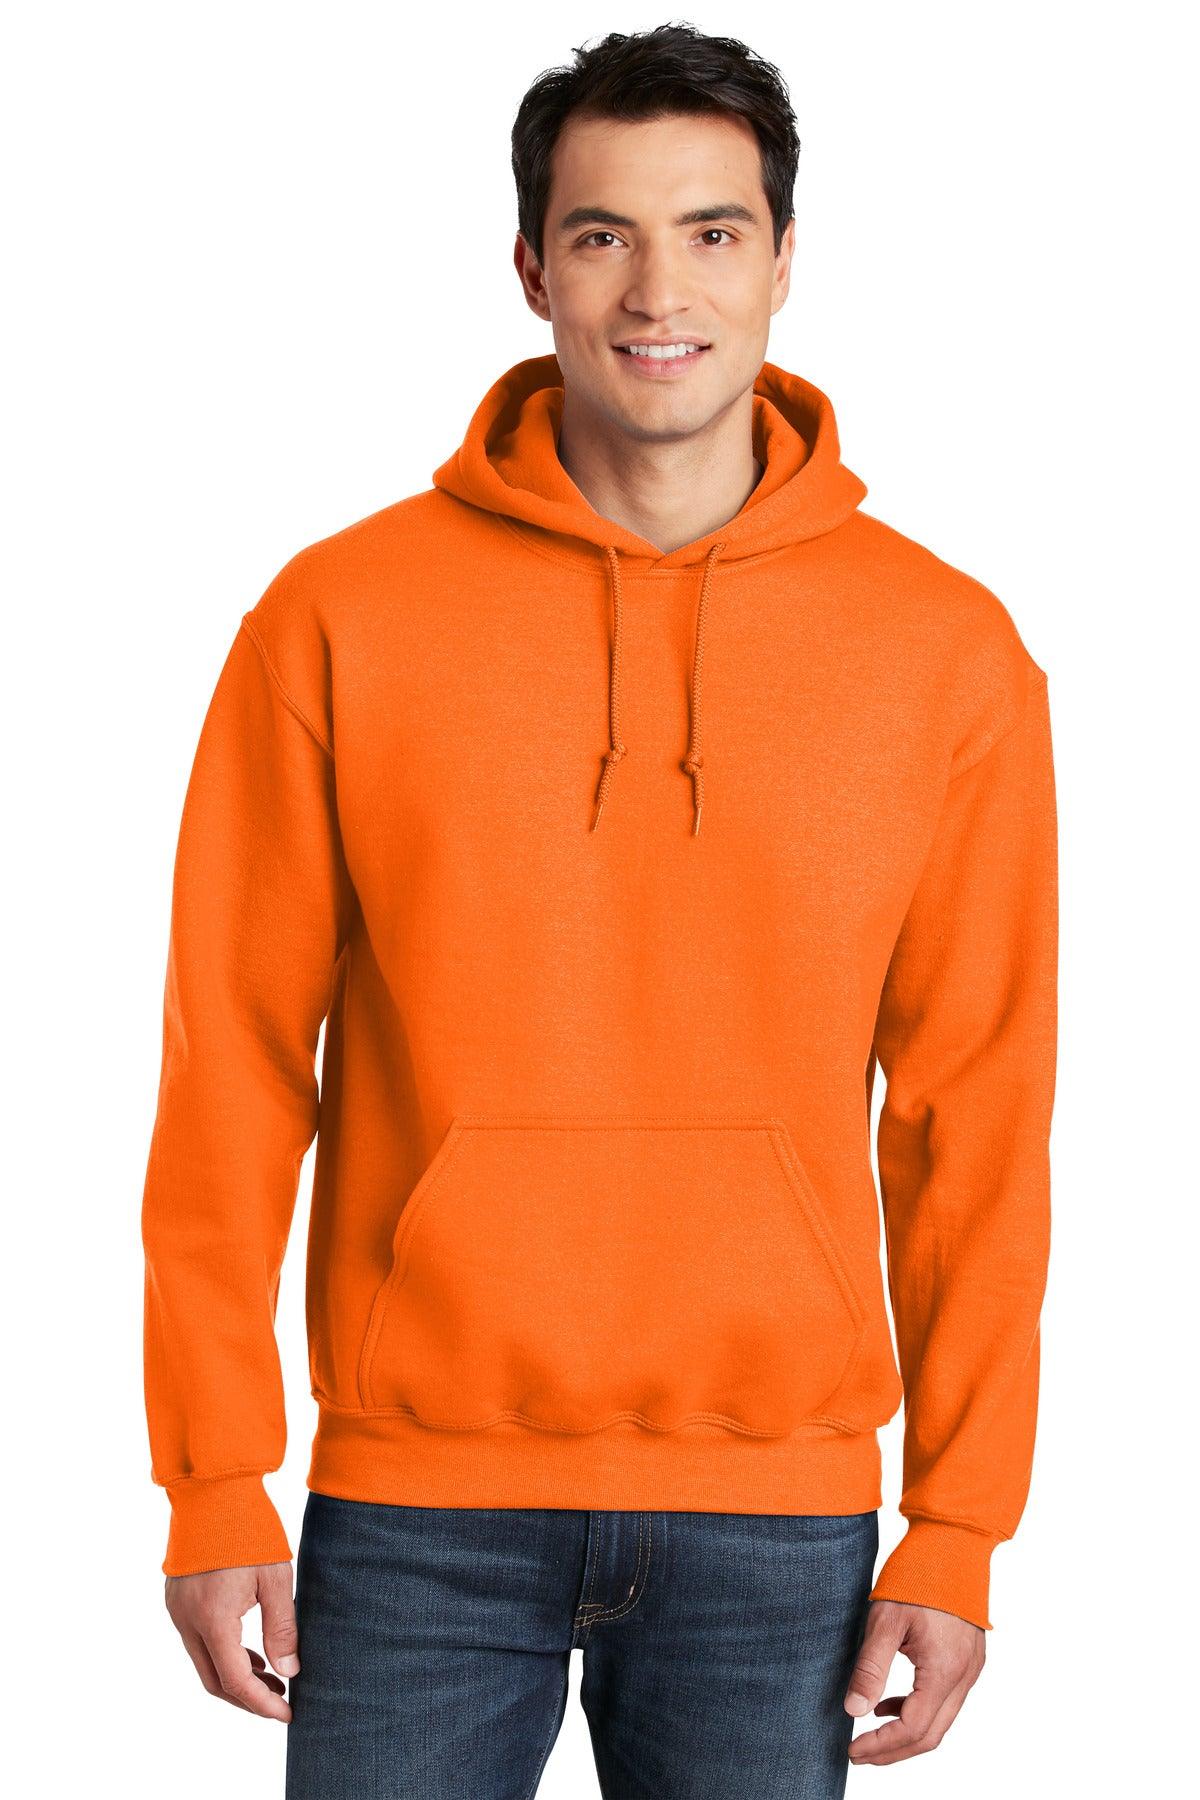 Gildan - DryBlend Pullover Hooded Sweatshirt. 12500 - Dresses Max